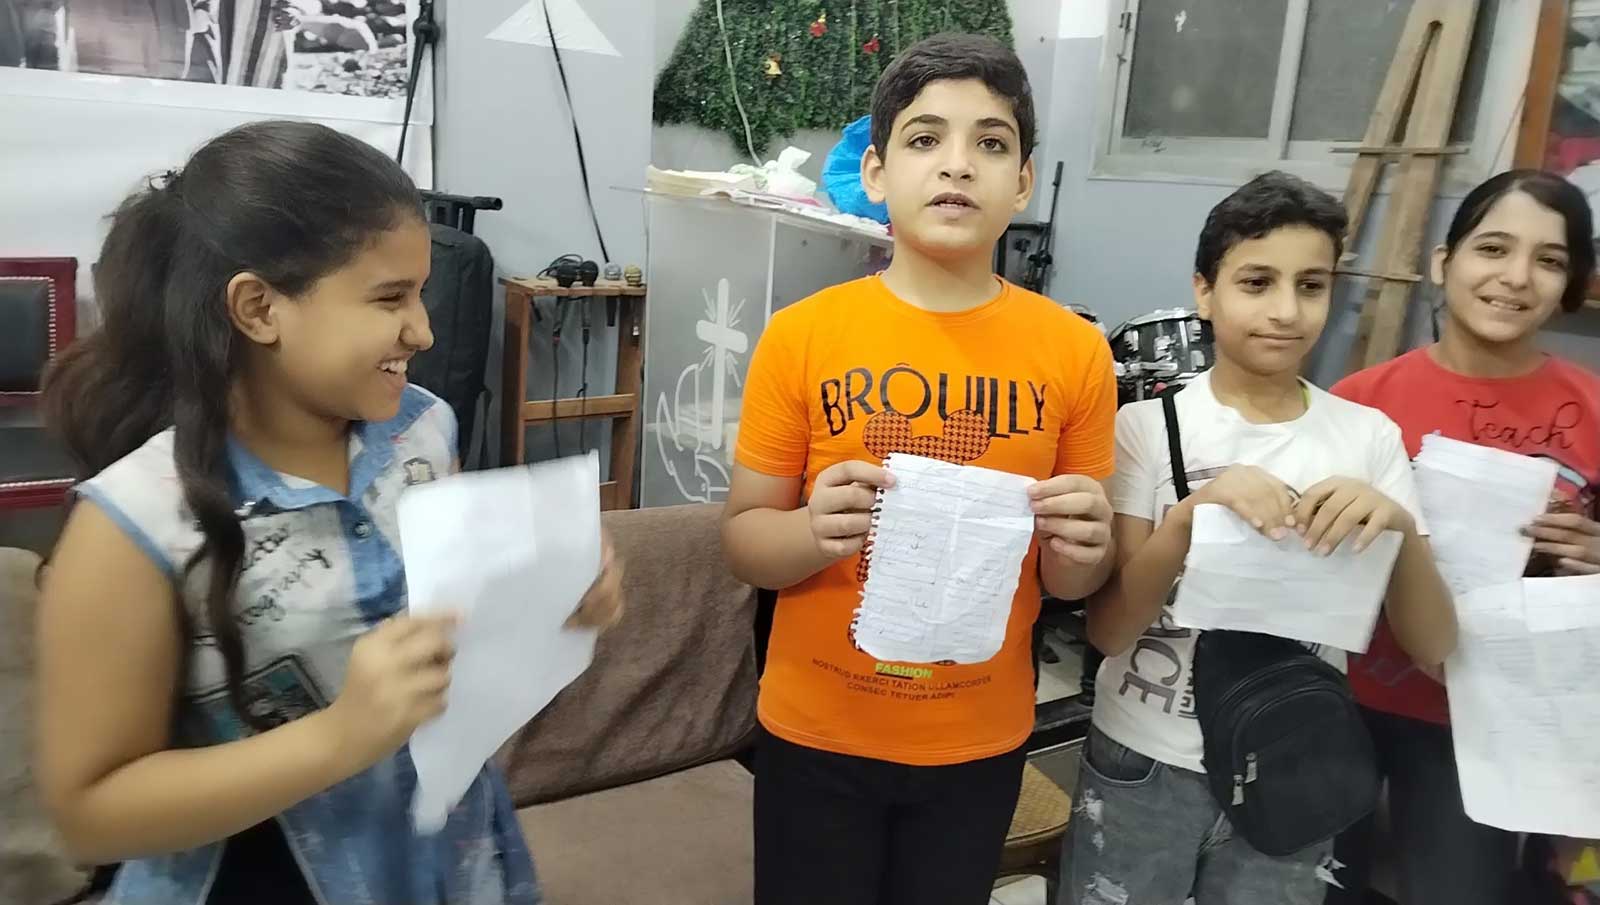 Helwan children each holding a piece of paper.